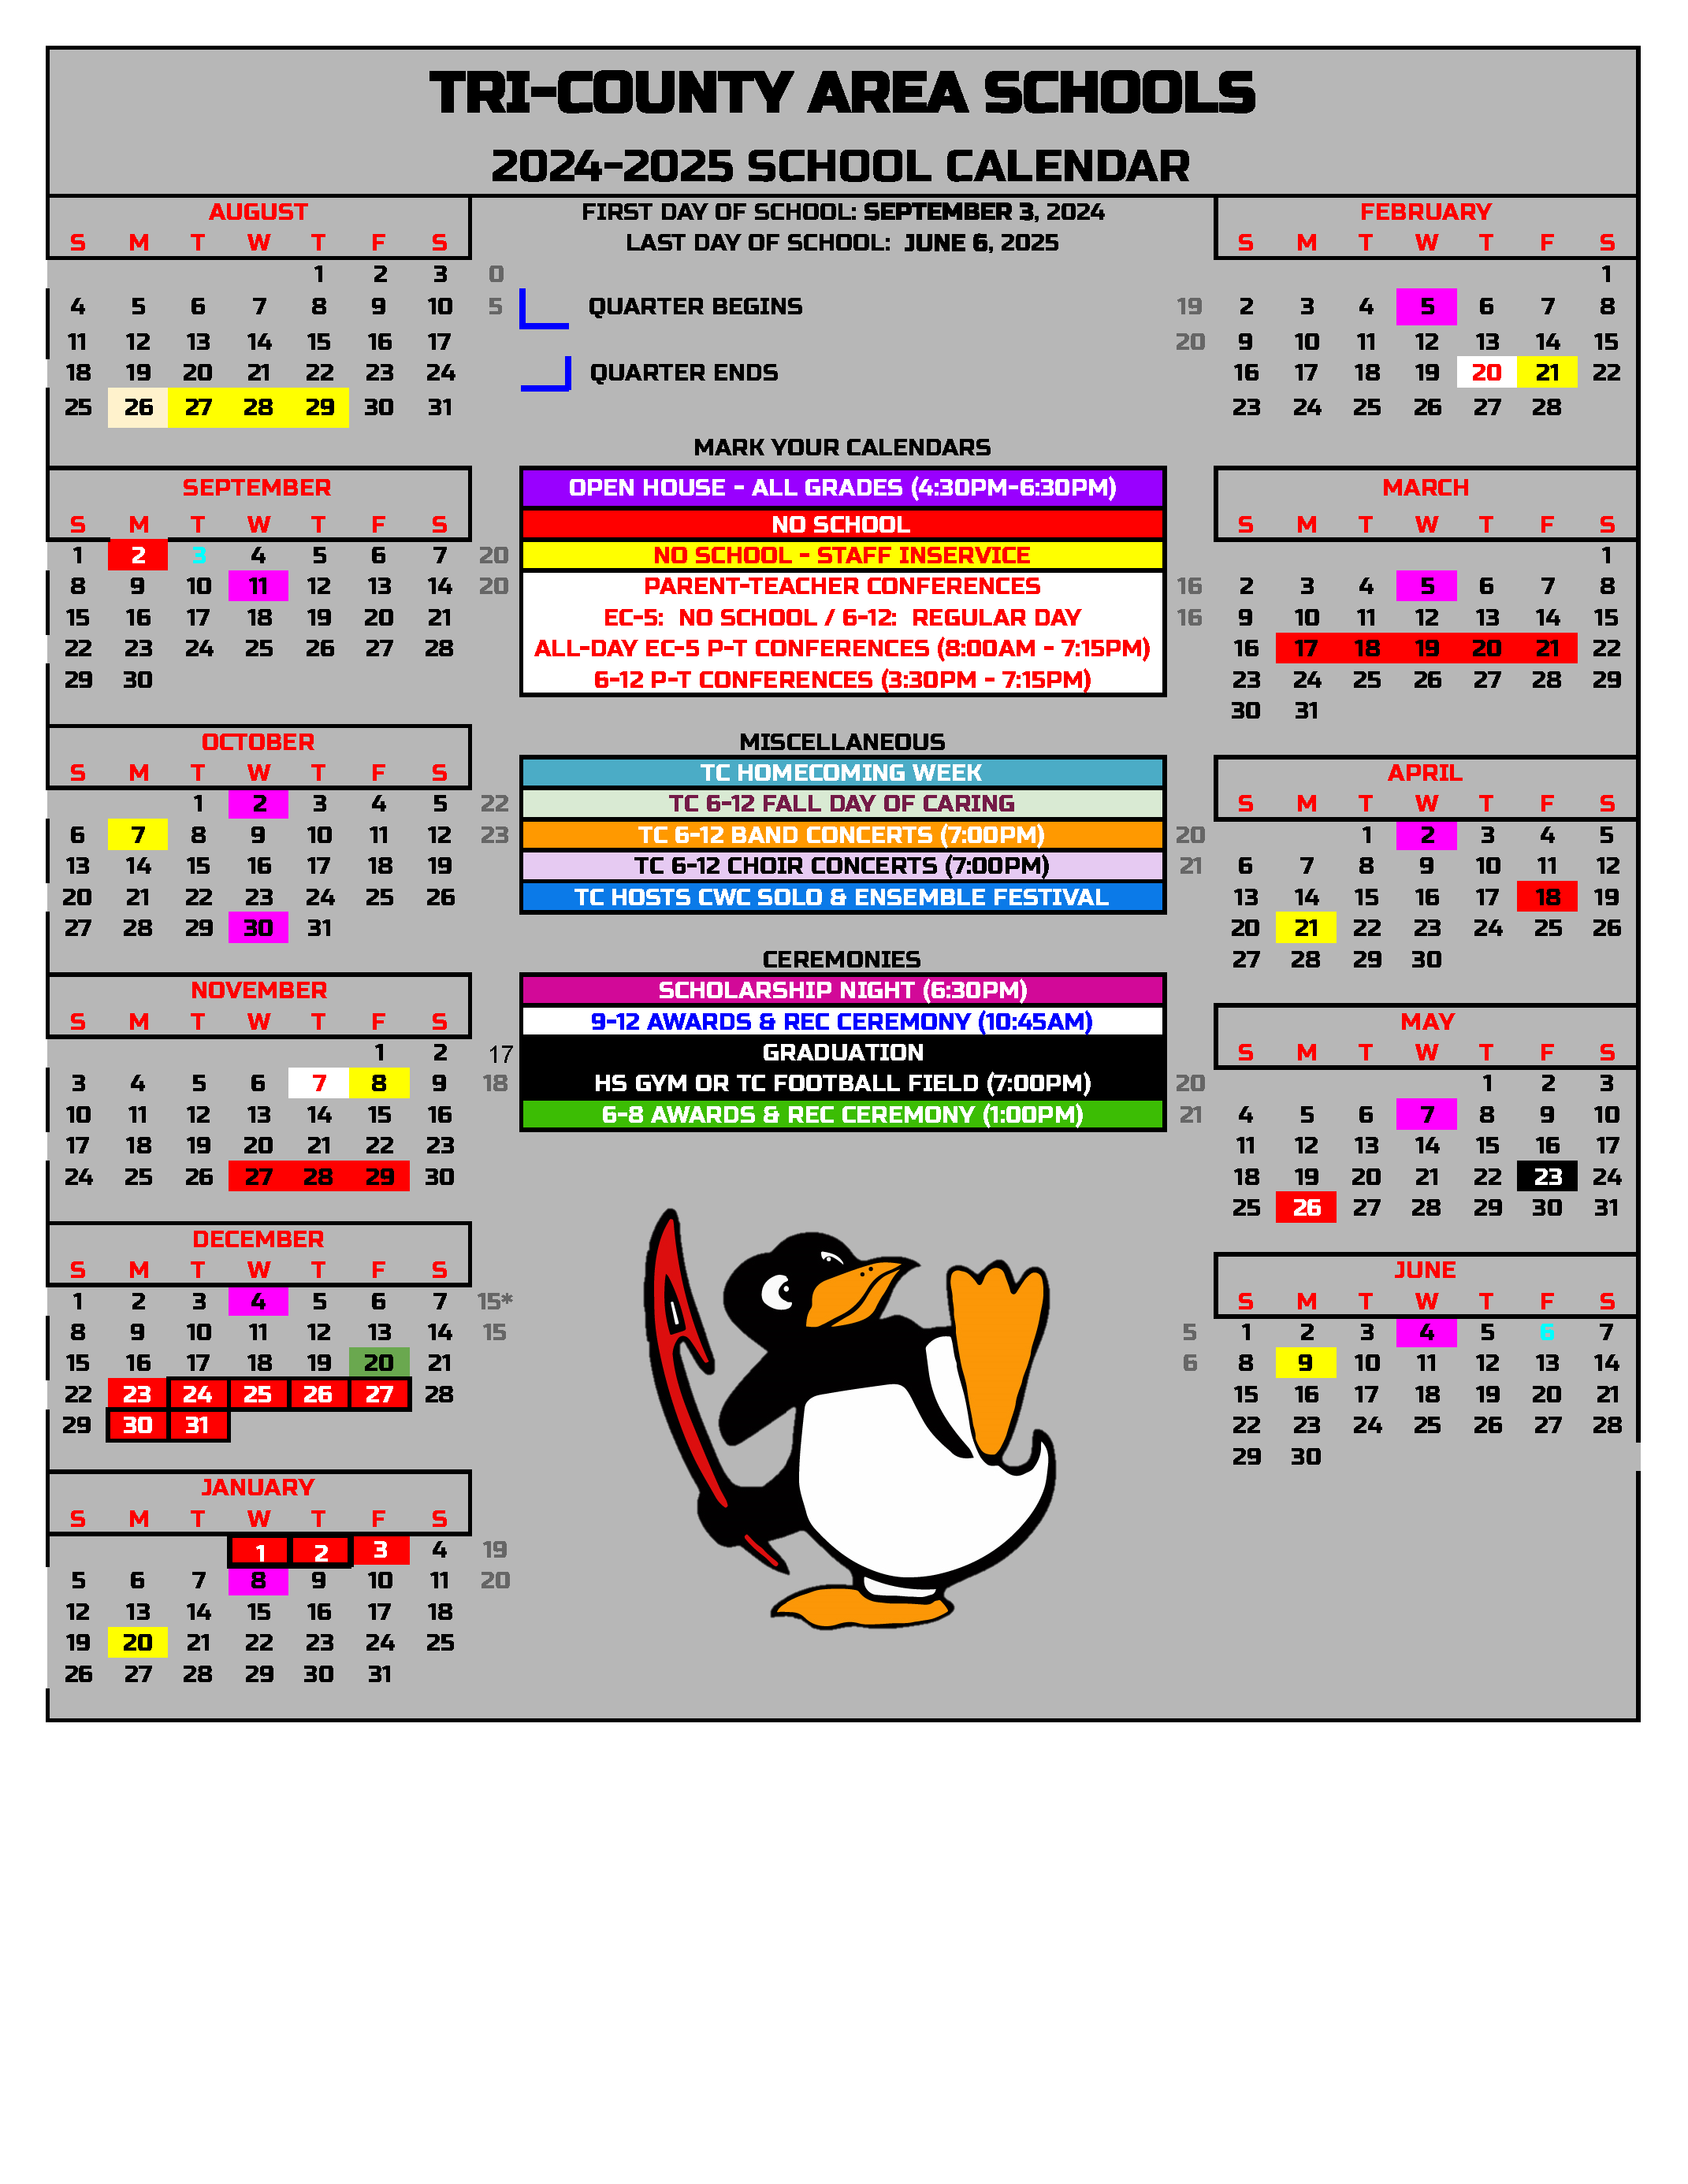 24-25 School calendar